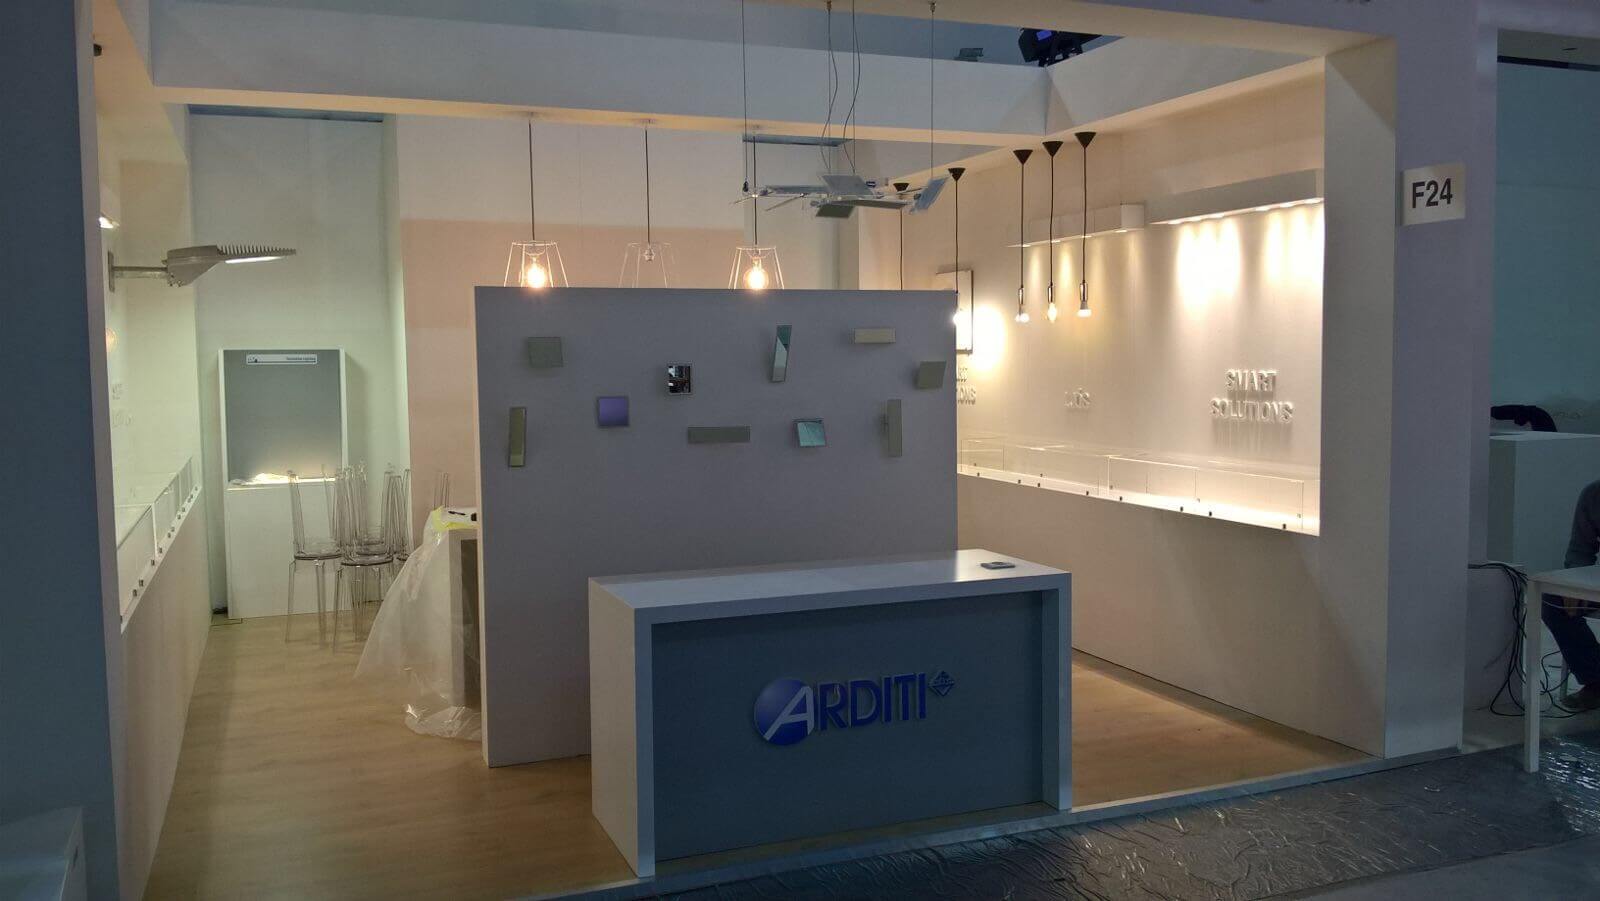 Arditi spa booth at Eurluce showing LumiBlade OLED panels